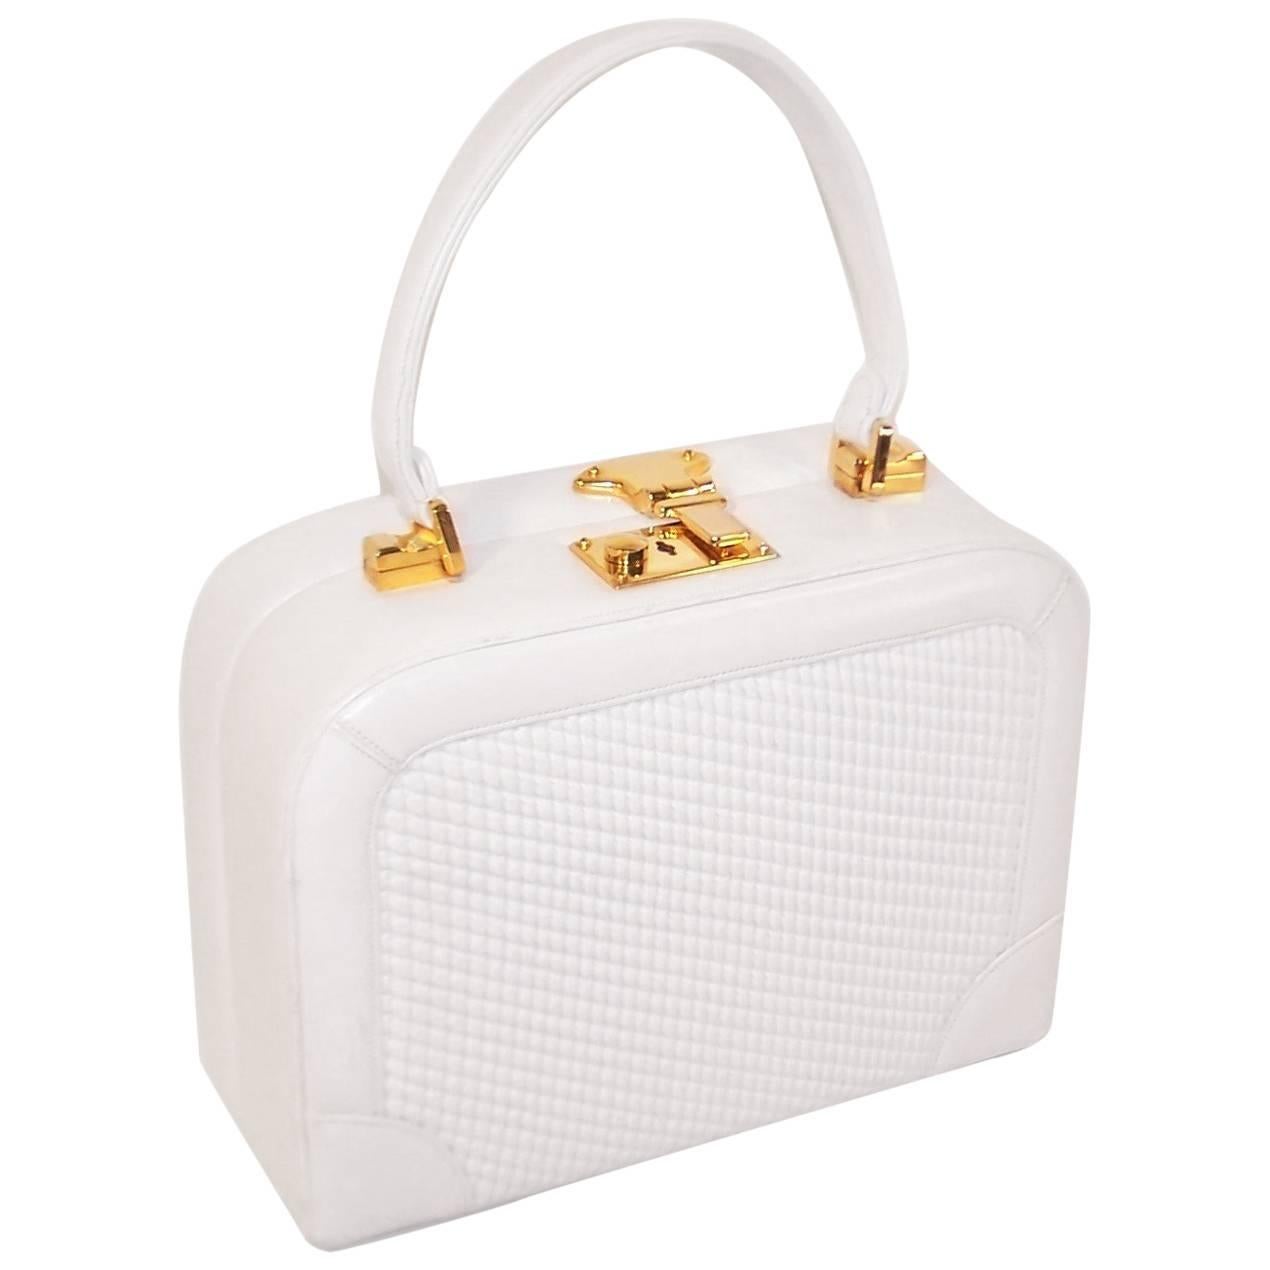 C.1990 Judith Leiber White Leather Box Handbag With Convertible Handles